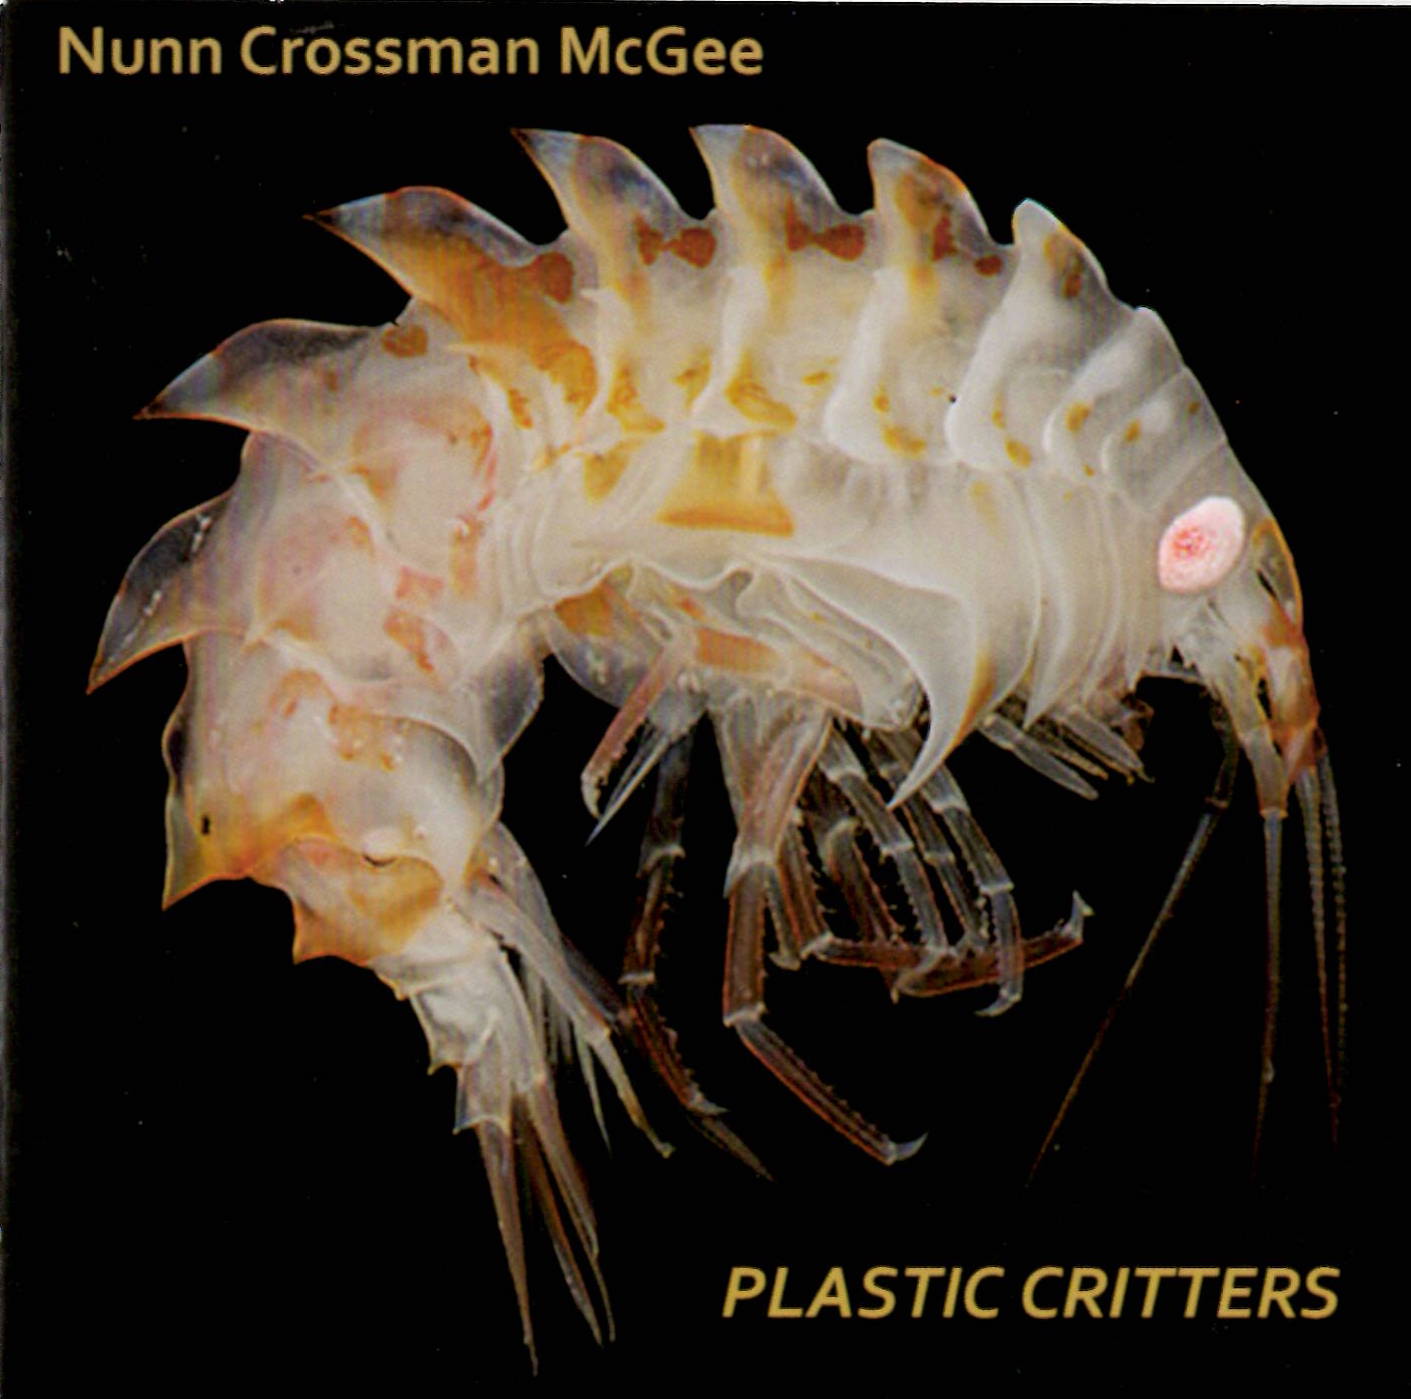 Nunn Crossman McGee, Plastic Critters